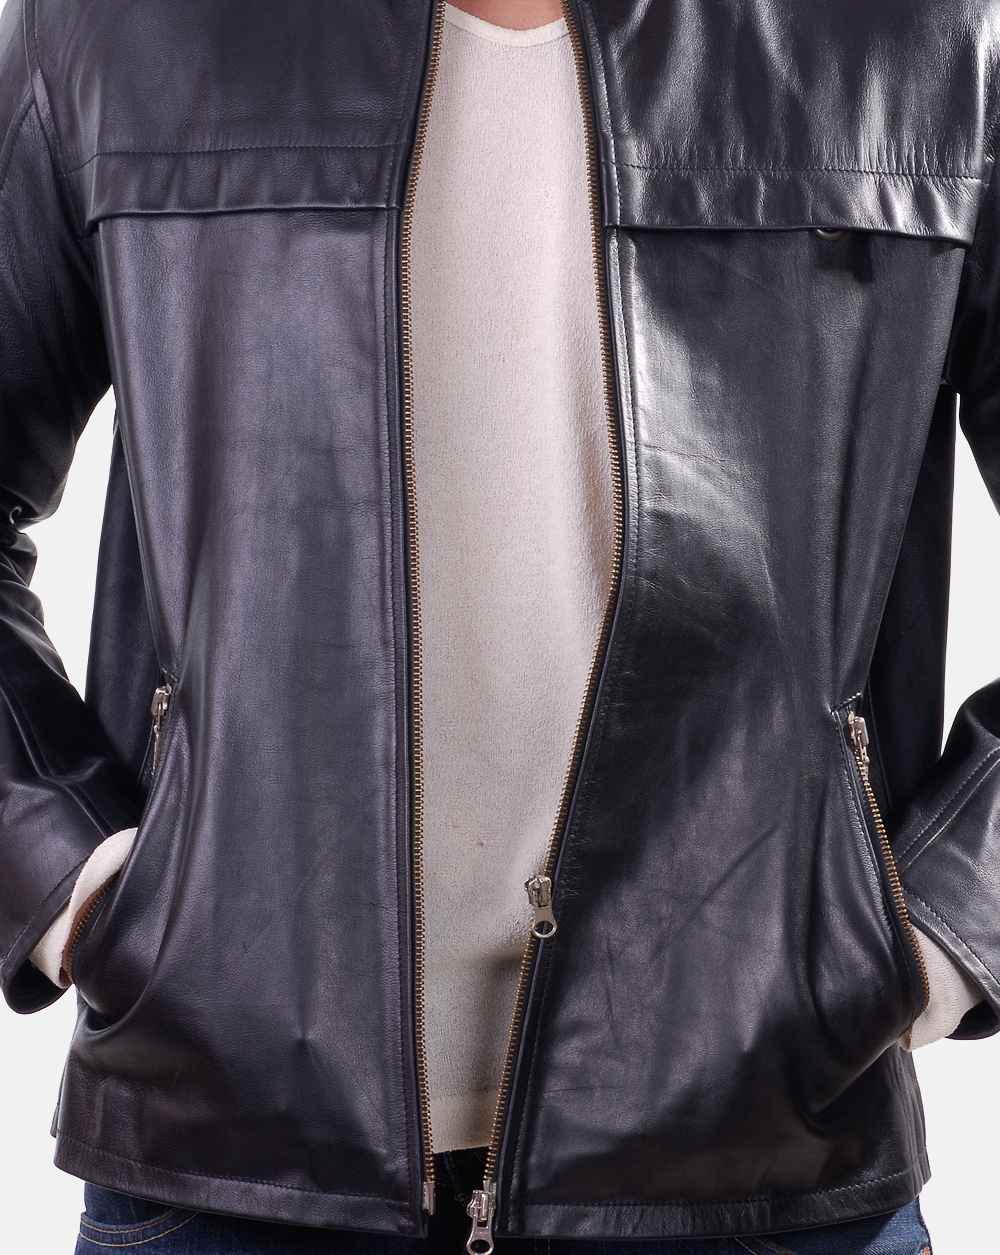 Polson two way zipper leather jacket